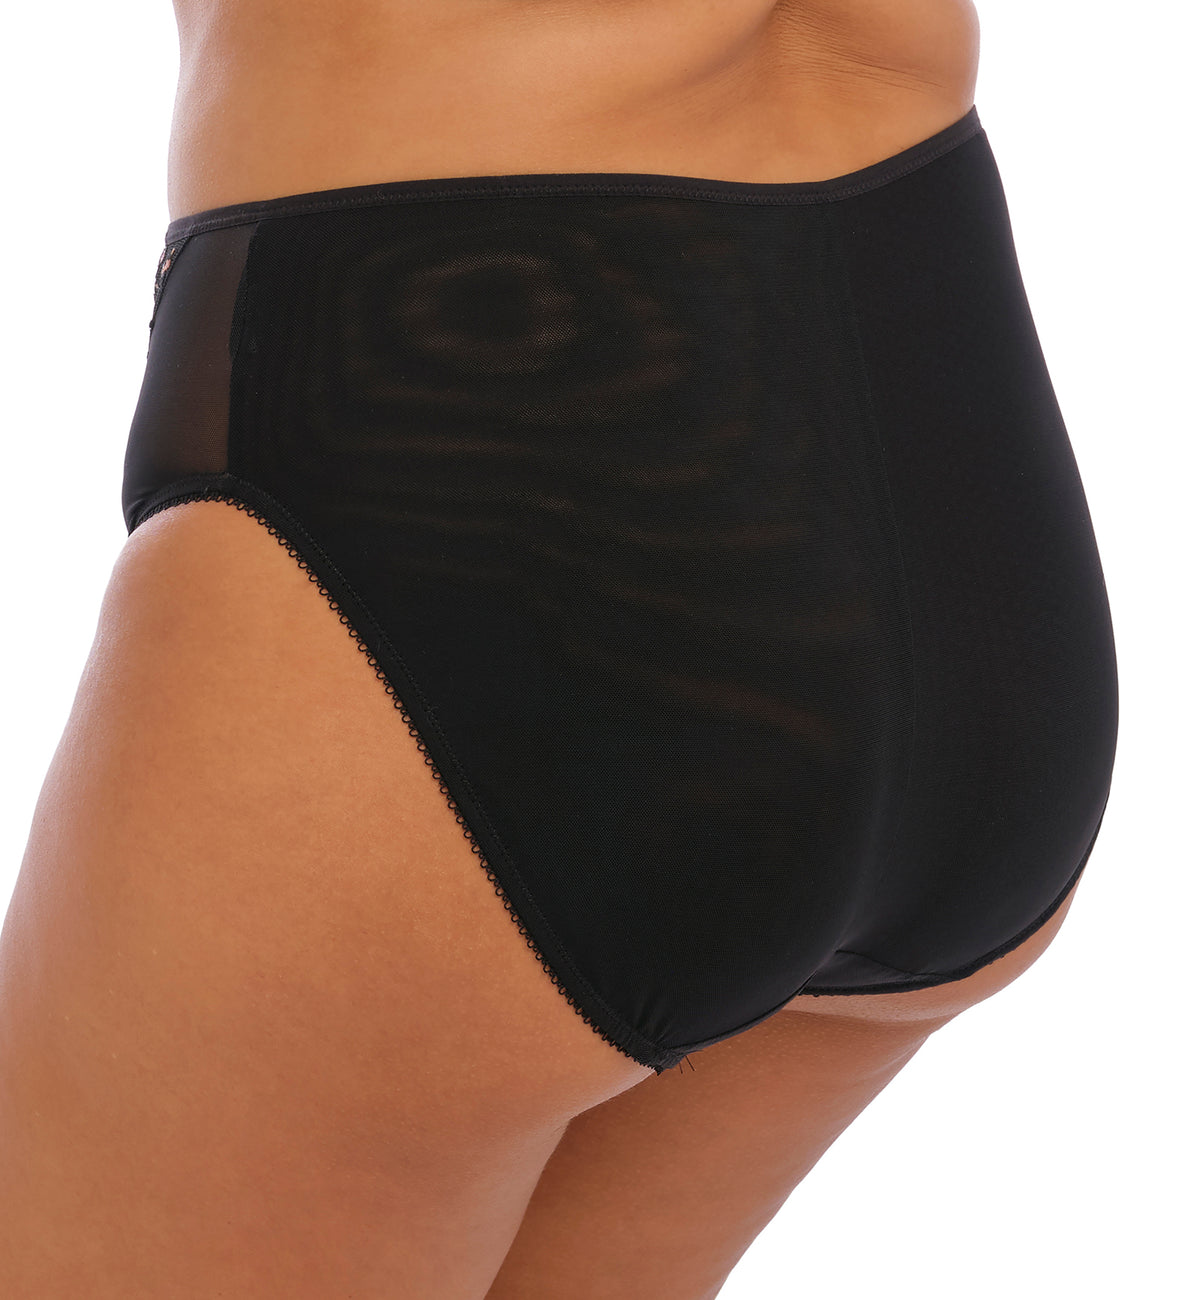 Elomi Namrah High Leg Brief Panty (301353),Medium,Black - Black,Medium